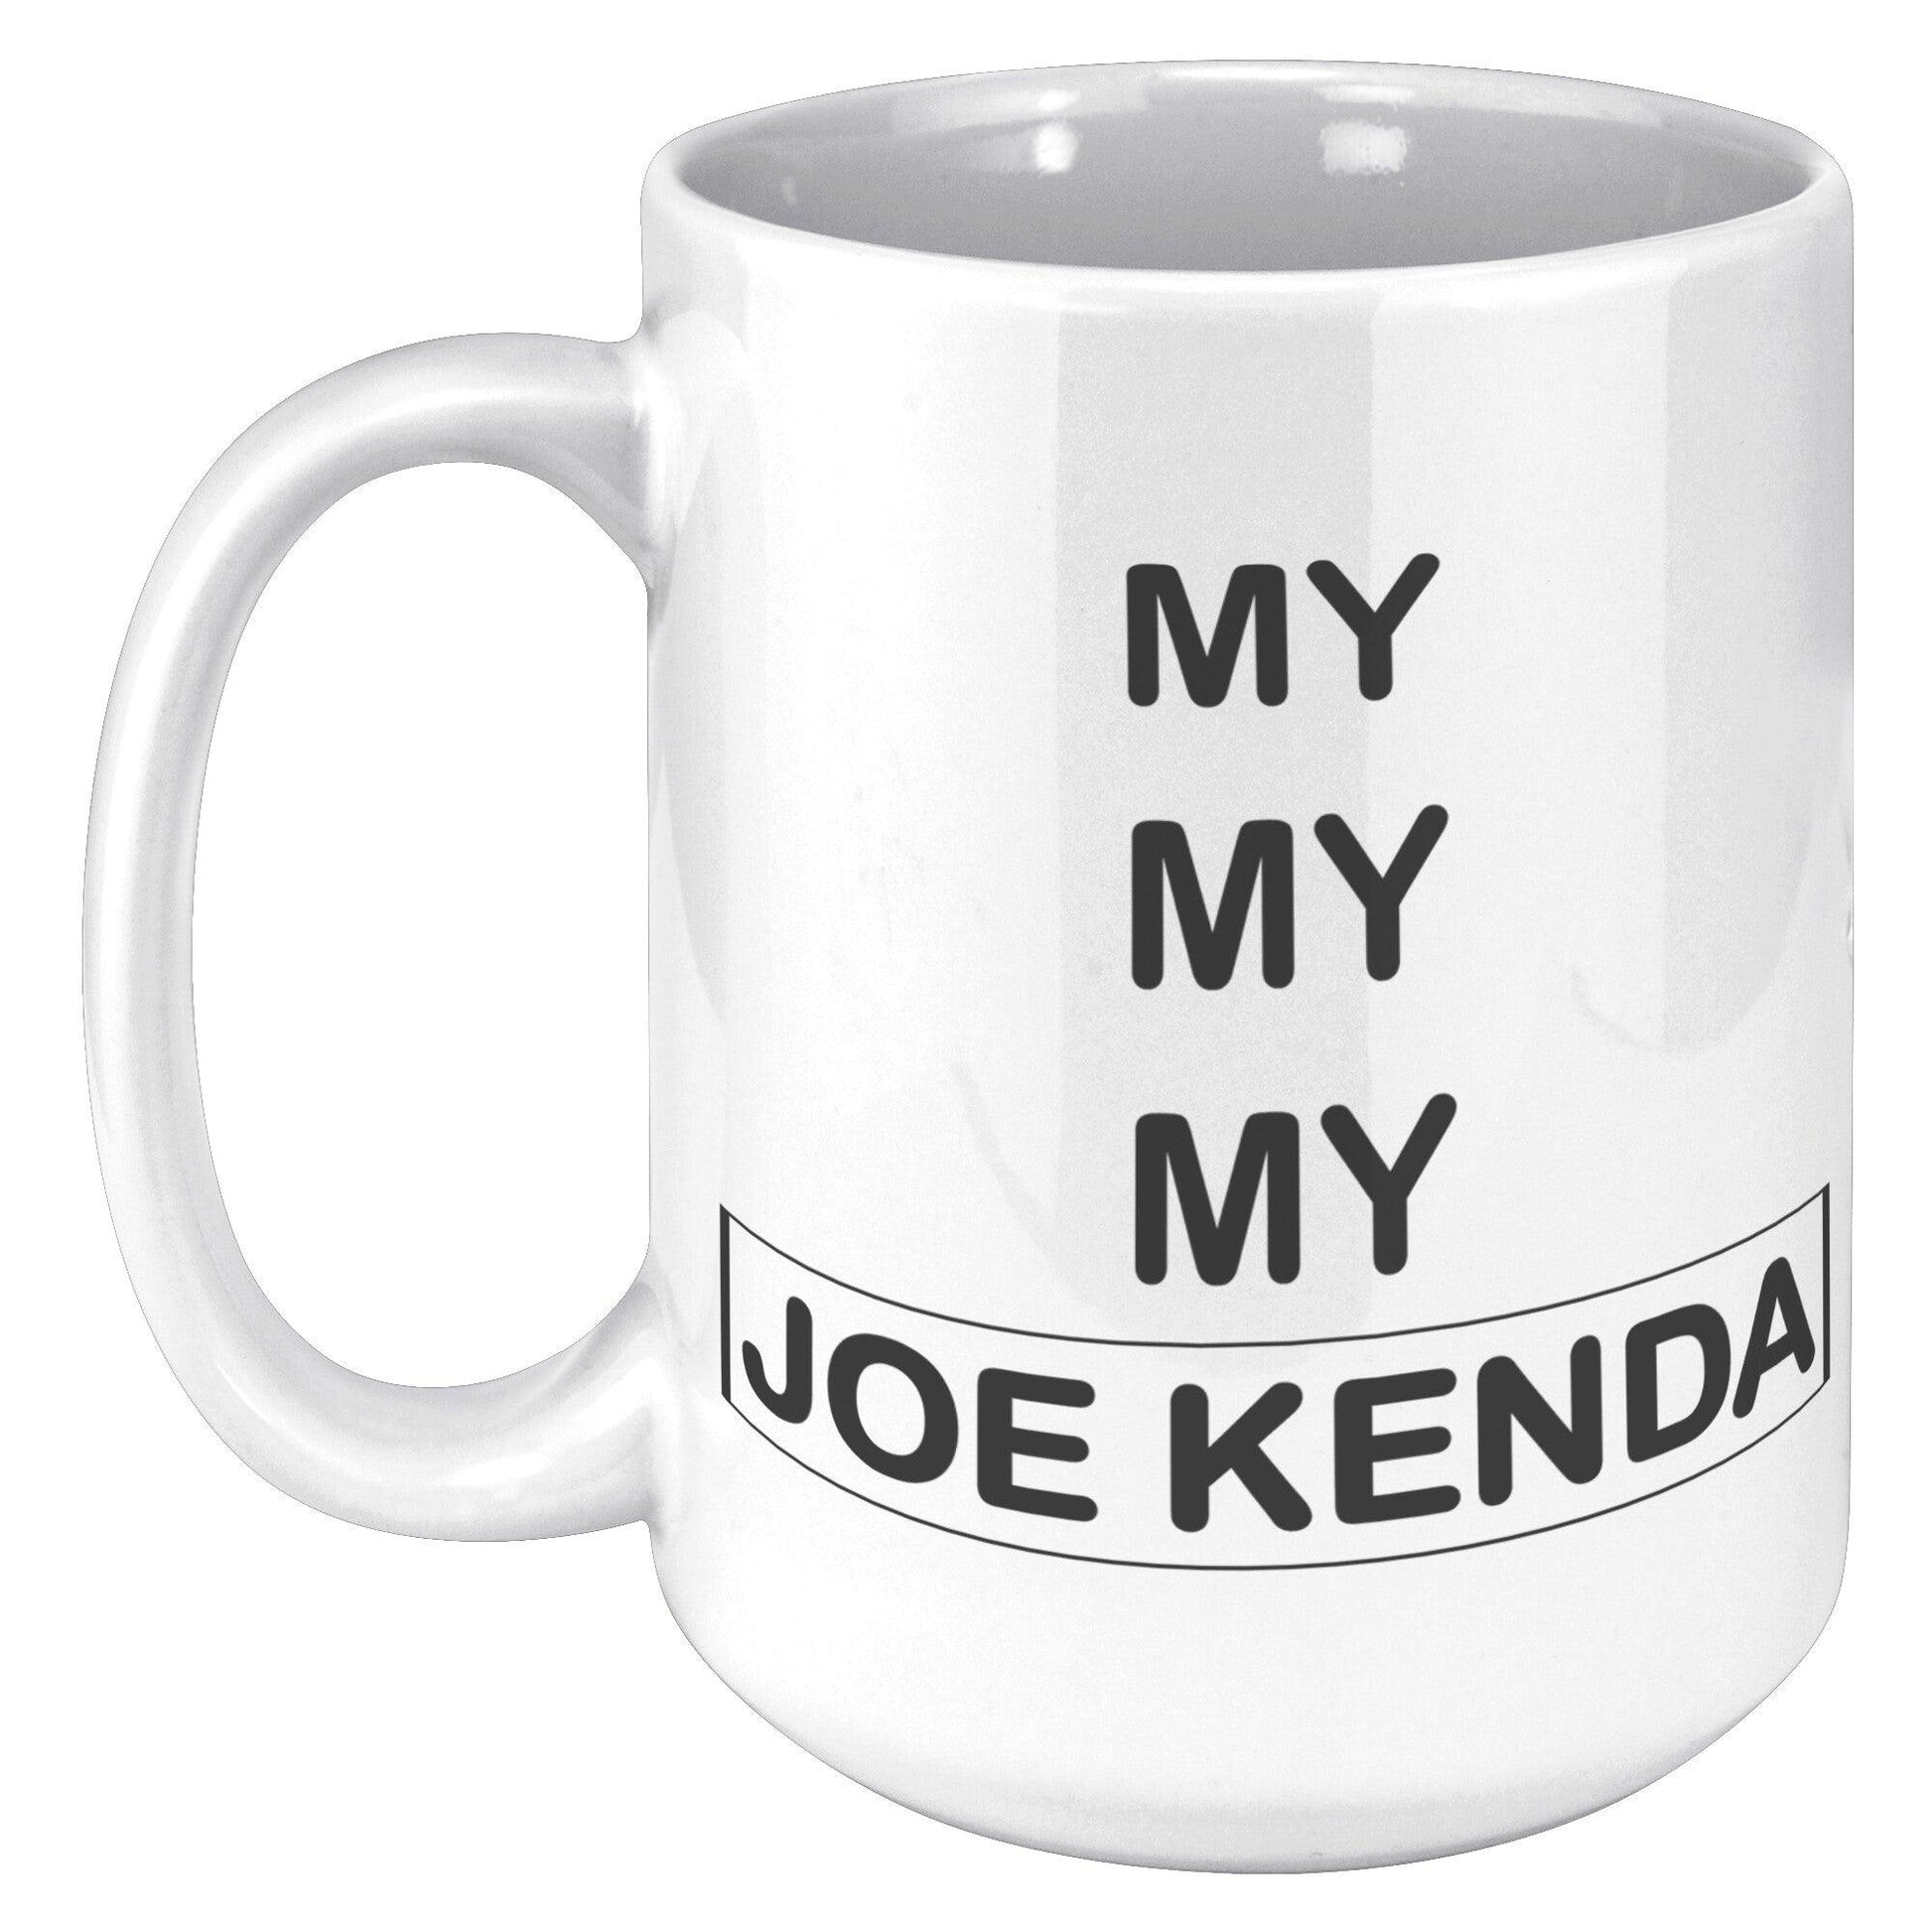 My My My Joe Kenda White Mug - TheGivenGet